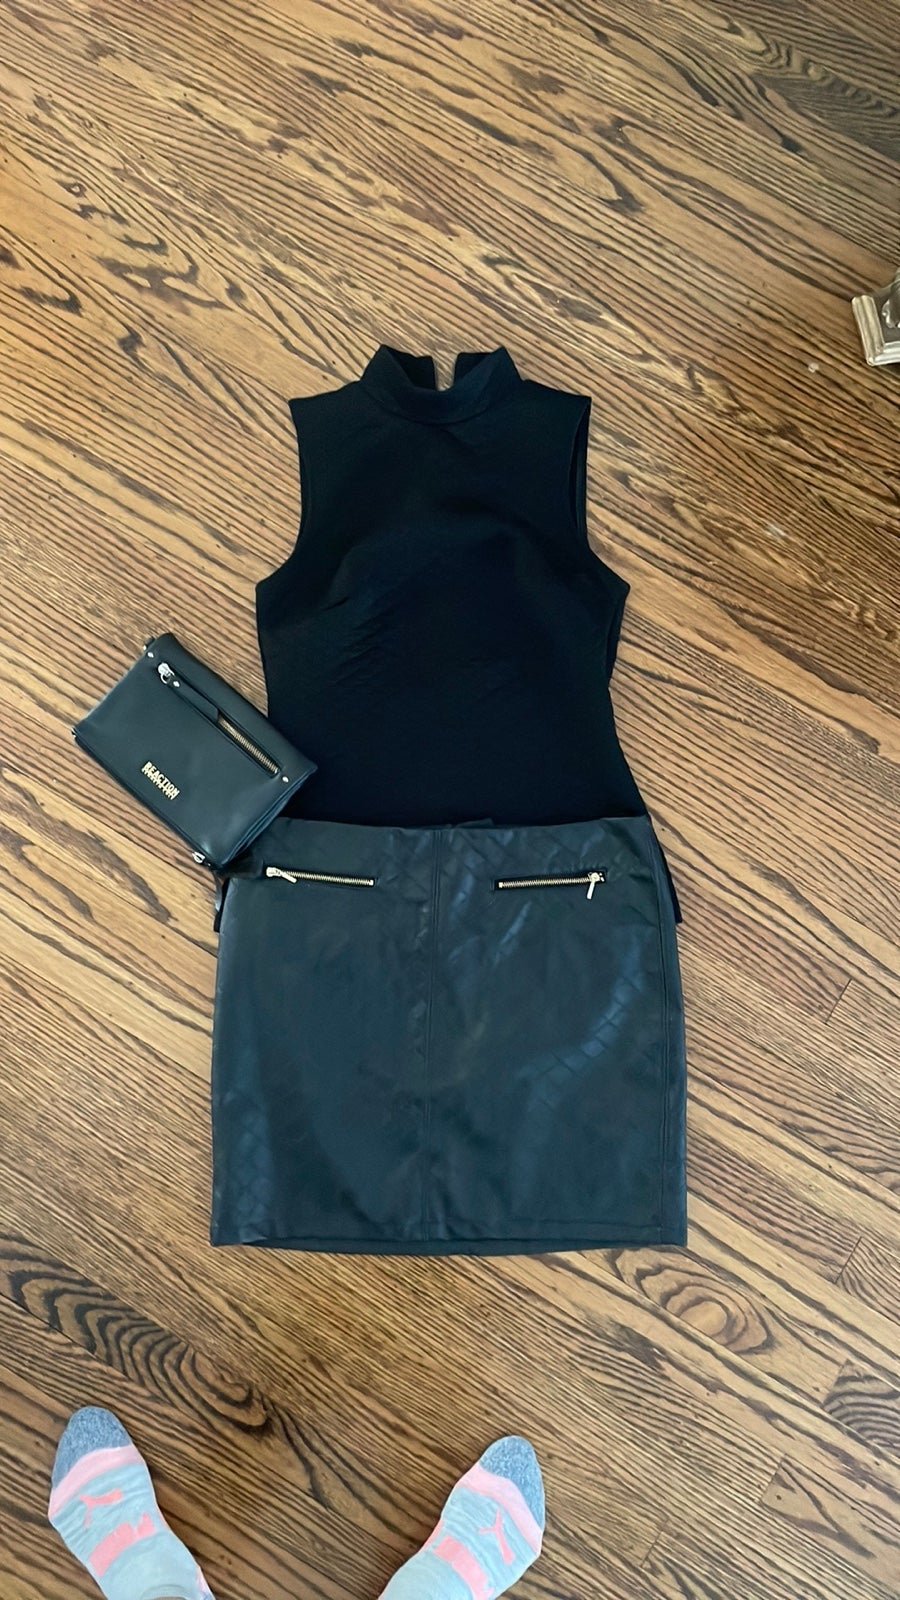 big discount Skirt black faux leather skirt 4 hXkRSHMwh just buy it